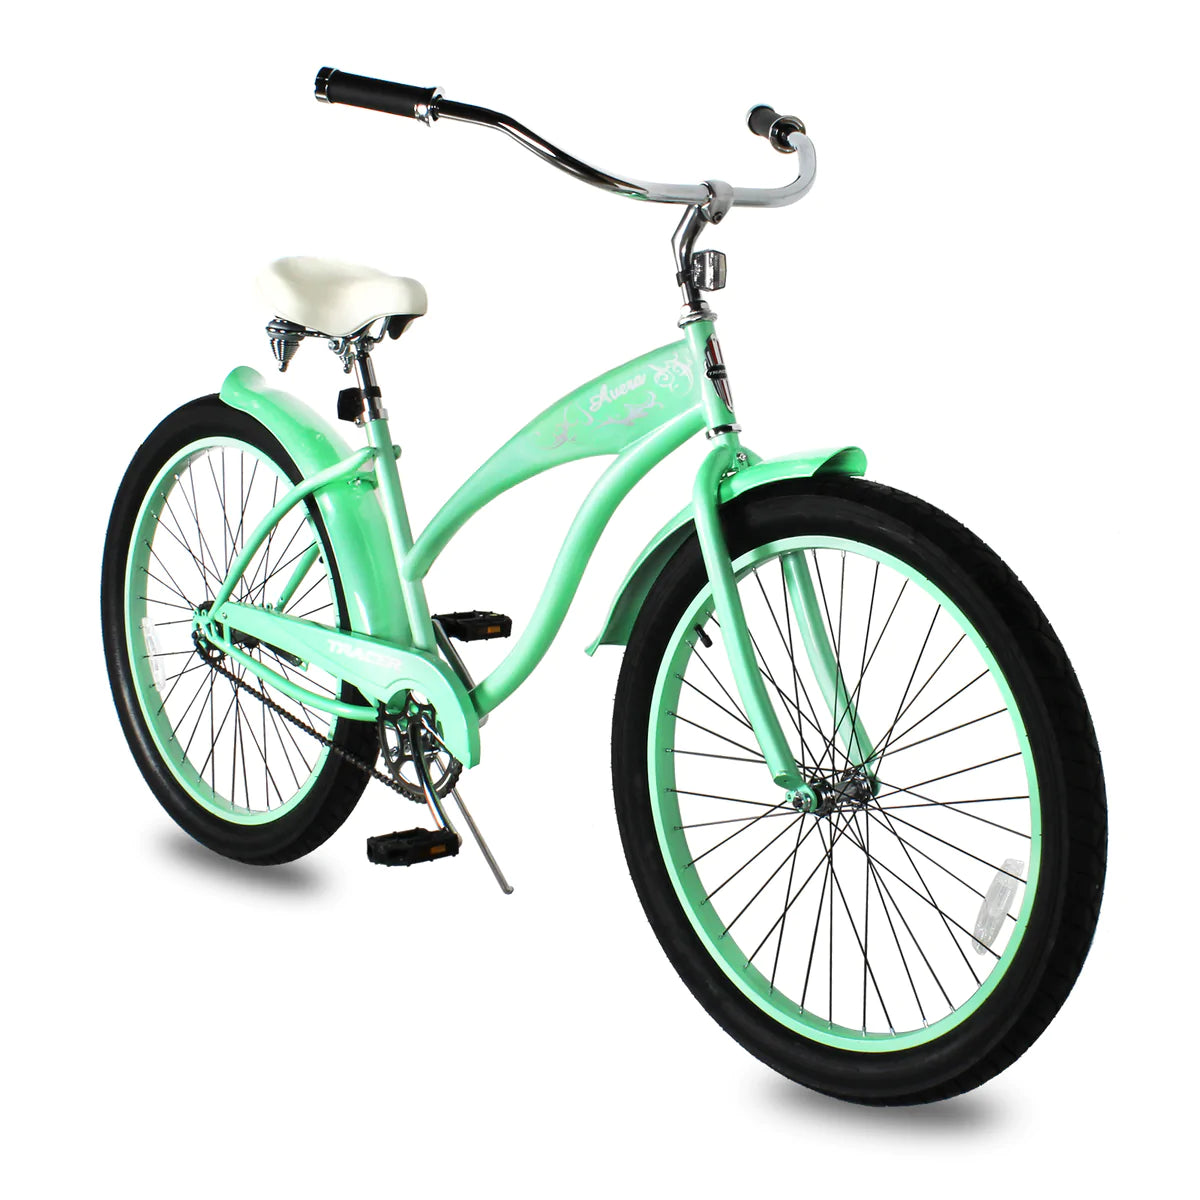 Tracer Avera 26" Beach Cruiser Bikes Single Speed - Mint Green | Beach Cruiser Bikes | Cruiser Bikes | Beach Bikes | Single Speed | Single Speed Cycle | Adult Bike | Bike Lover USA